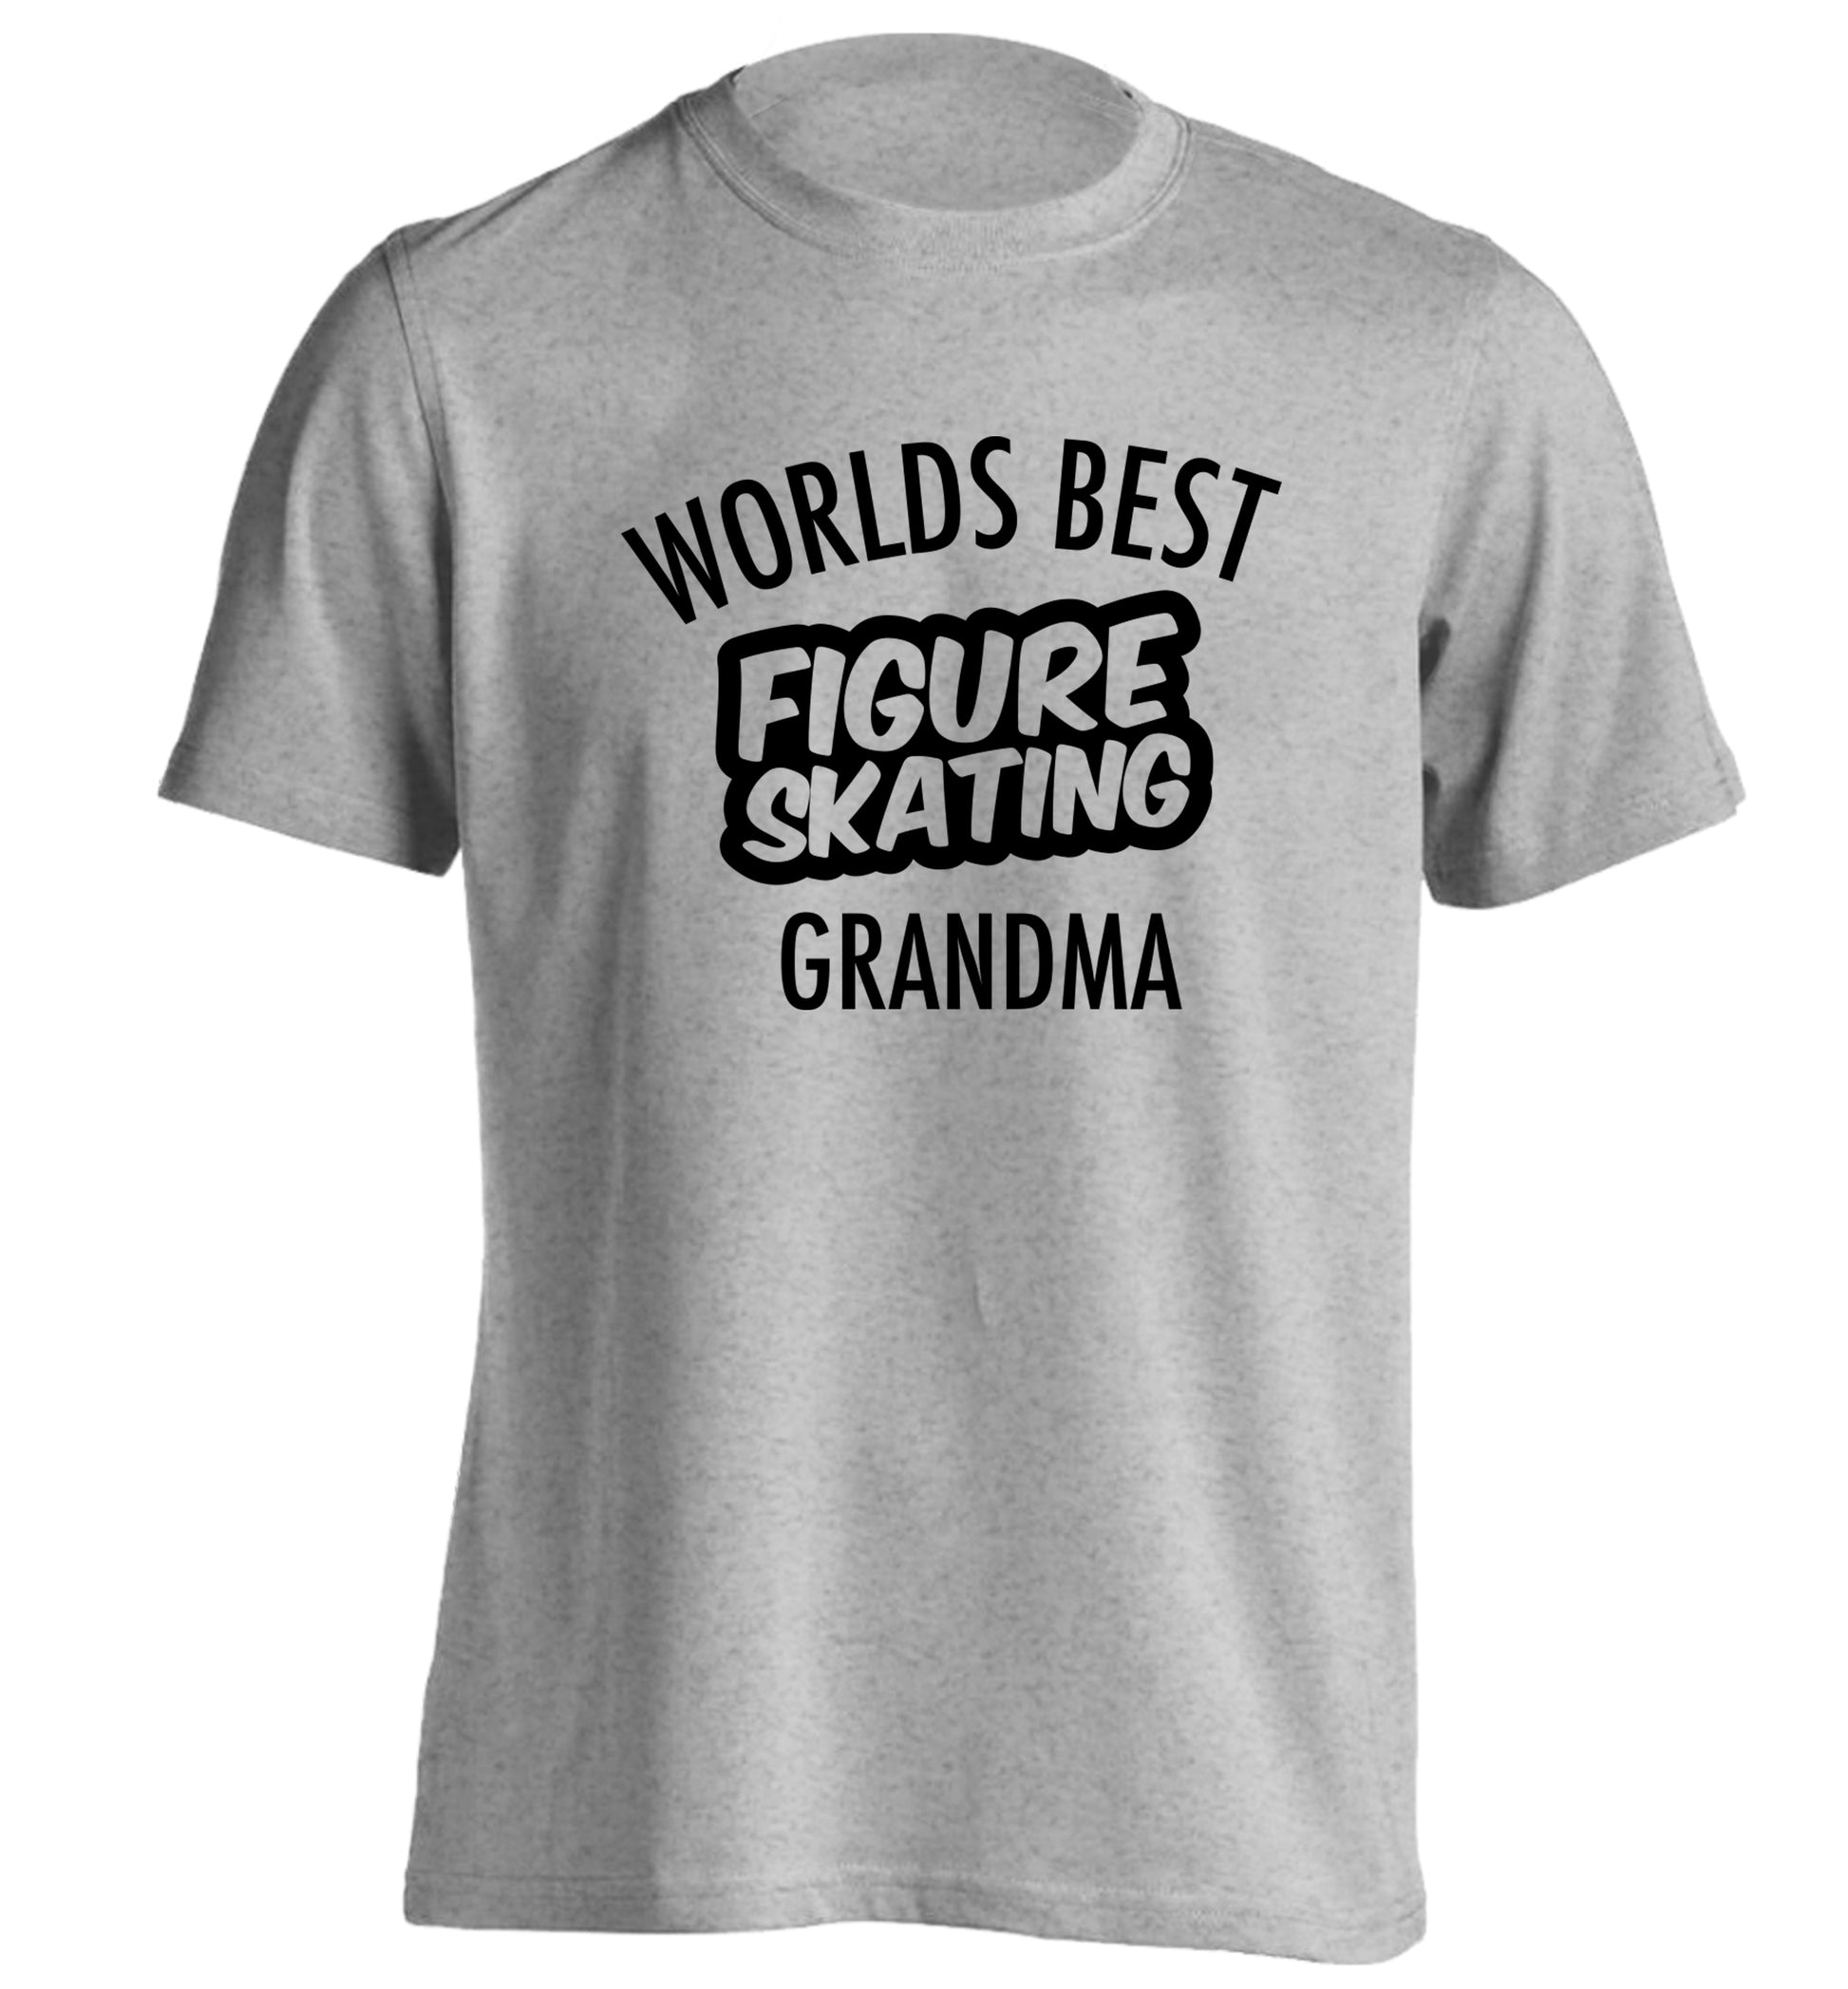 Worlds best figure skating grandma adults unisexgrey Tshirt 2XL